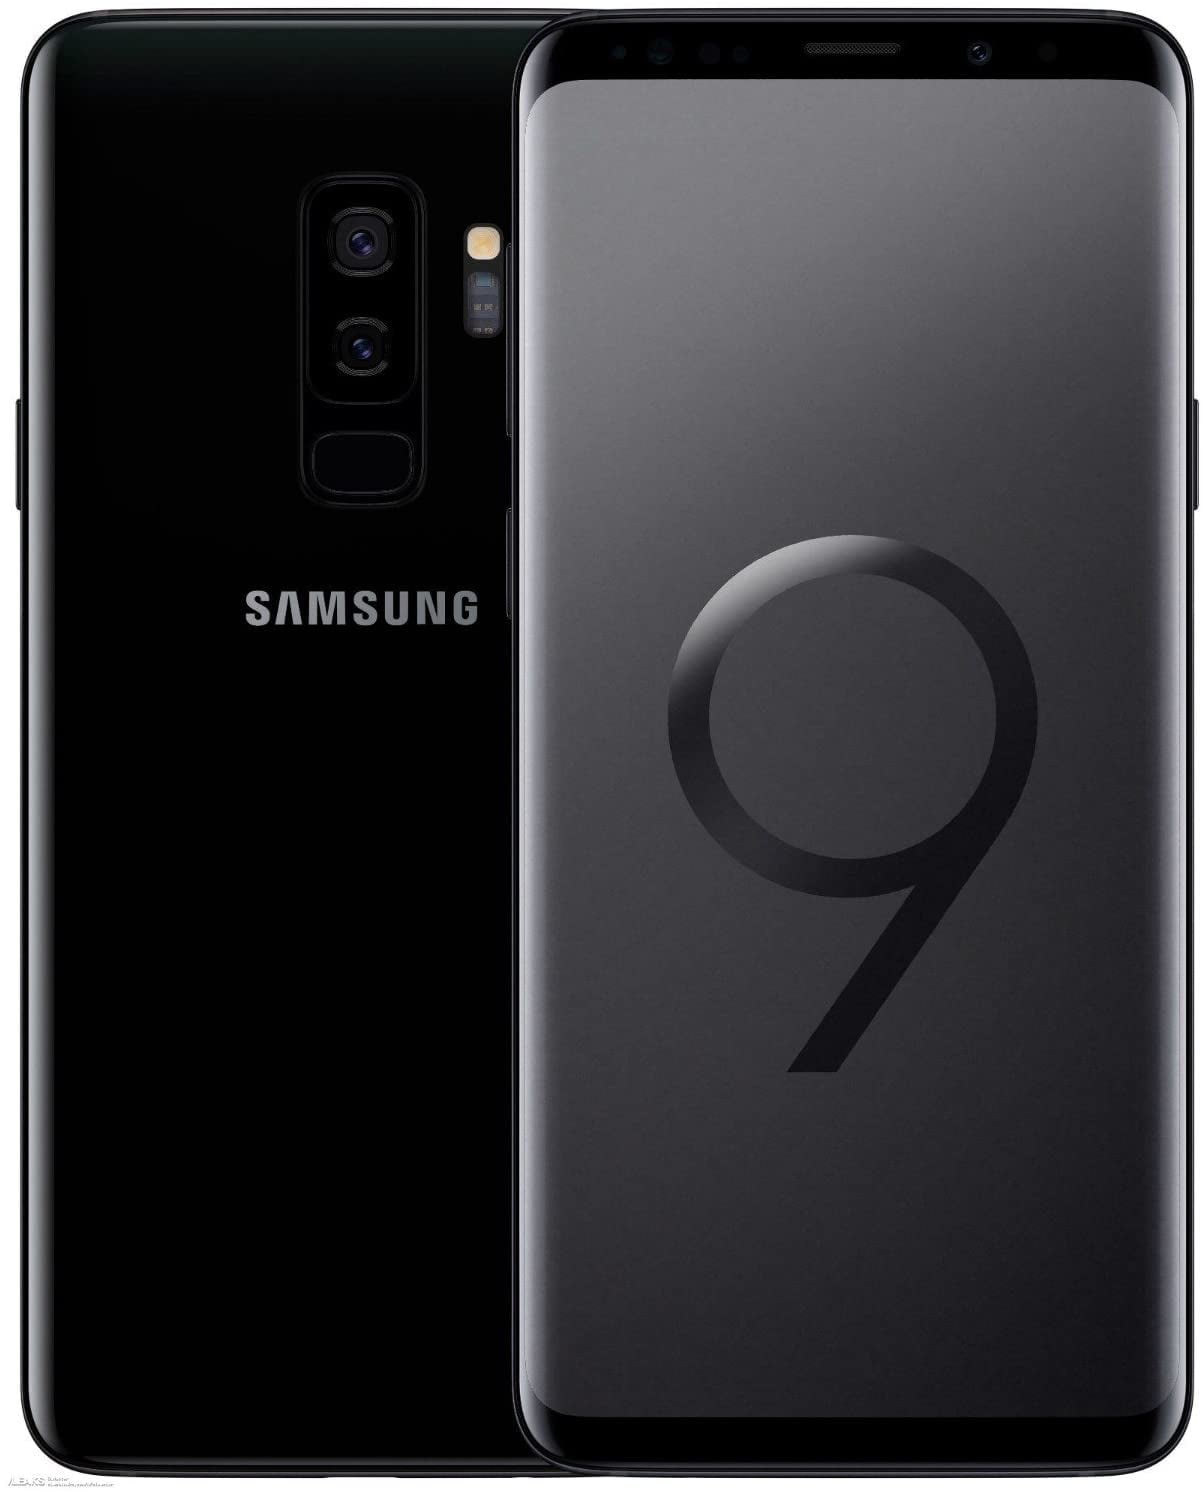 Samsung Galaxy S9+, 64GB, Midnight Black -Fully Unlocked (Renewed